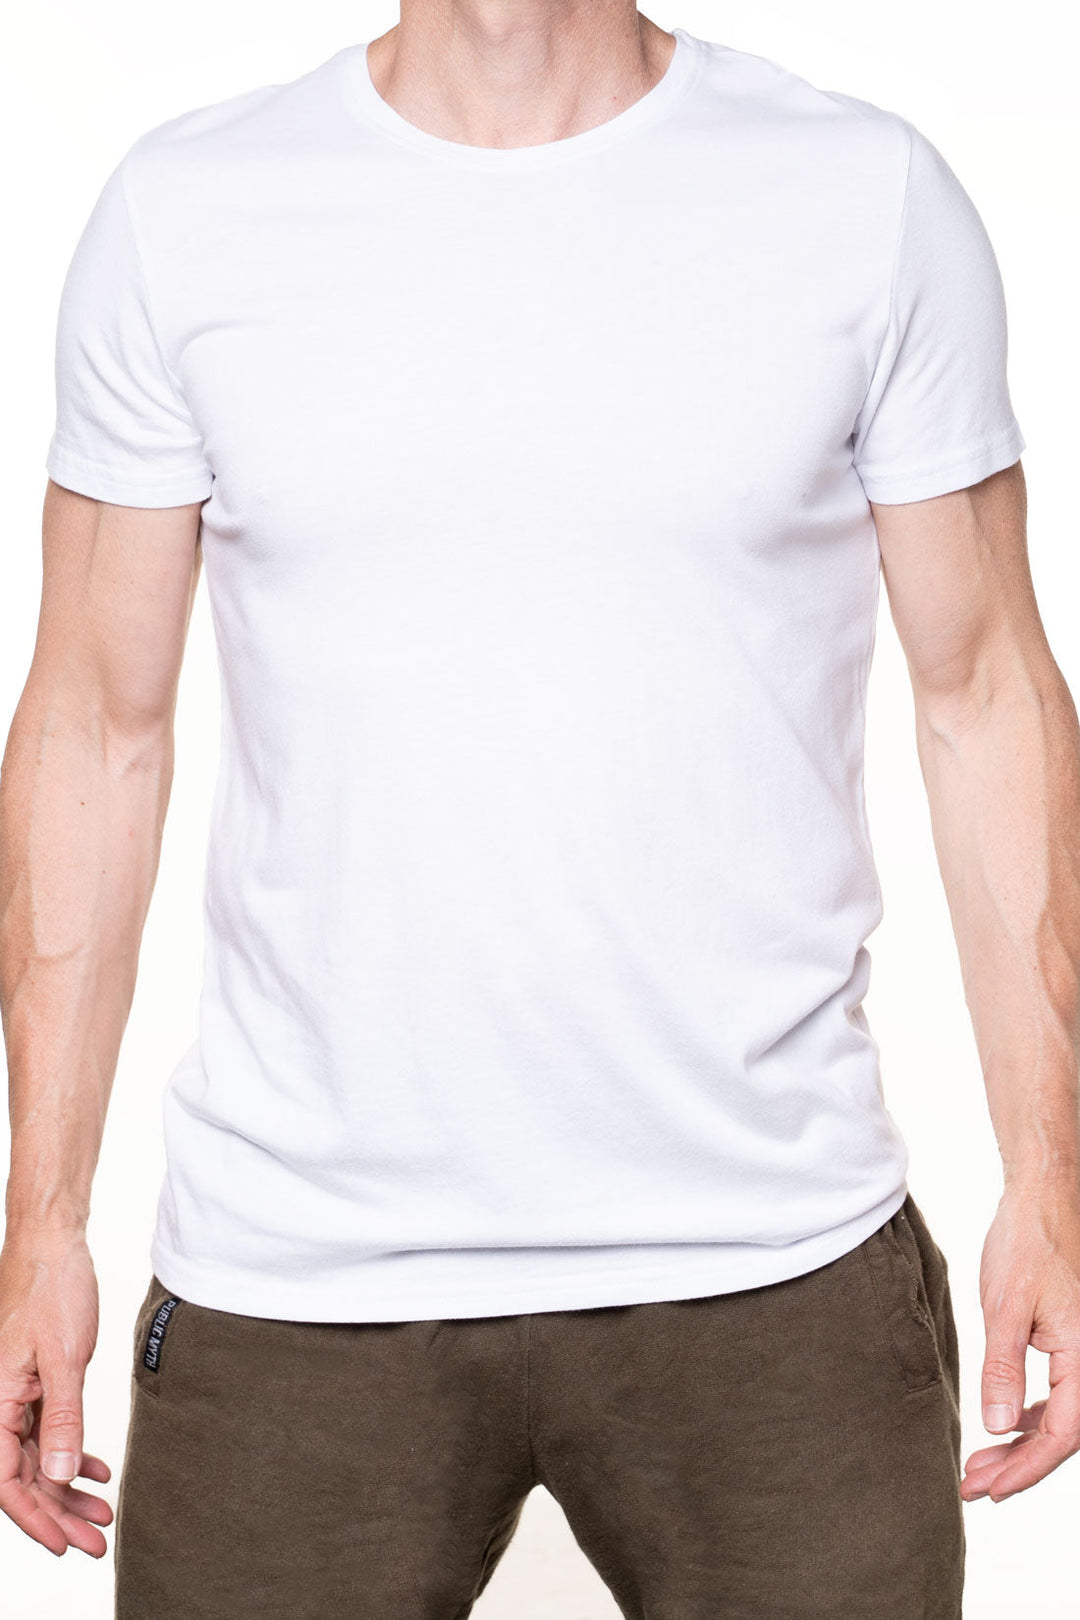 white men's bamboo T-shirt